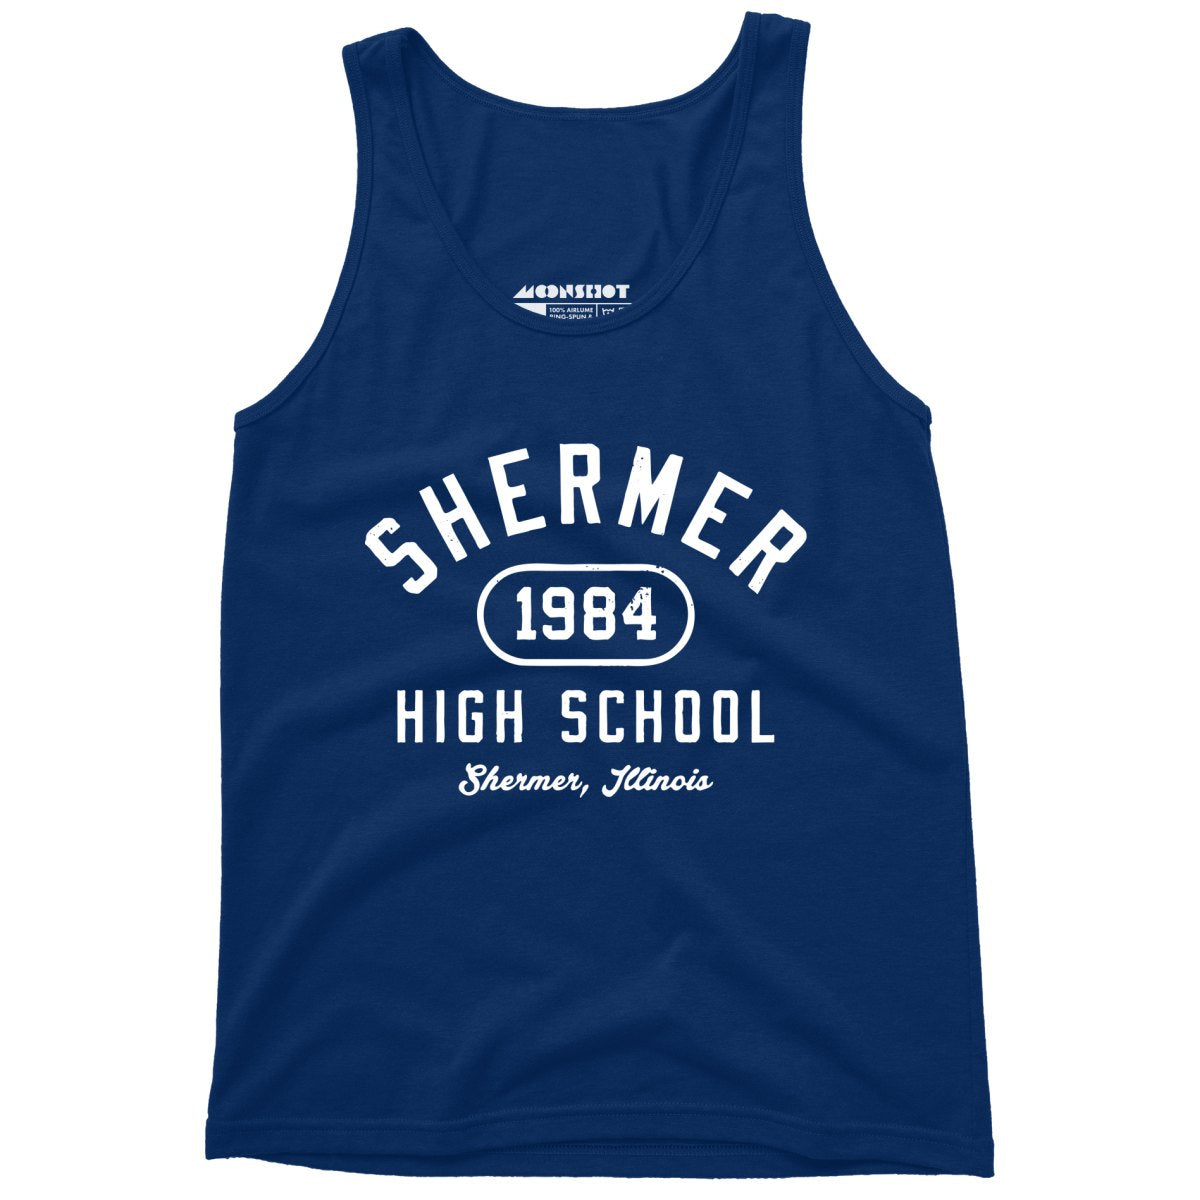 Shermer High School 1984 - Unisex Tank Top